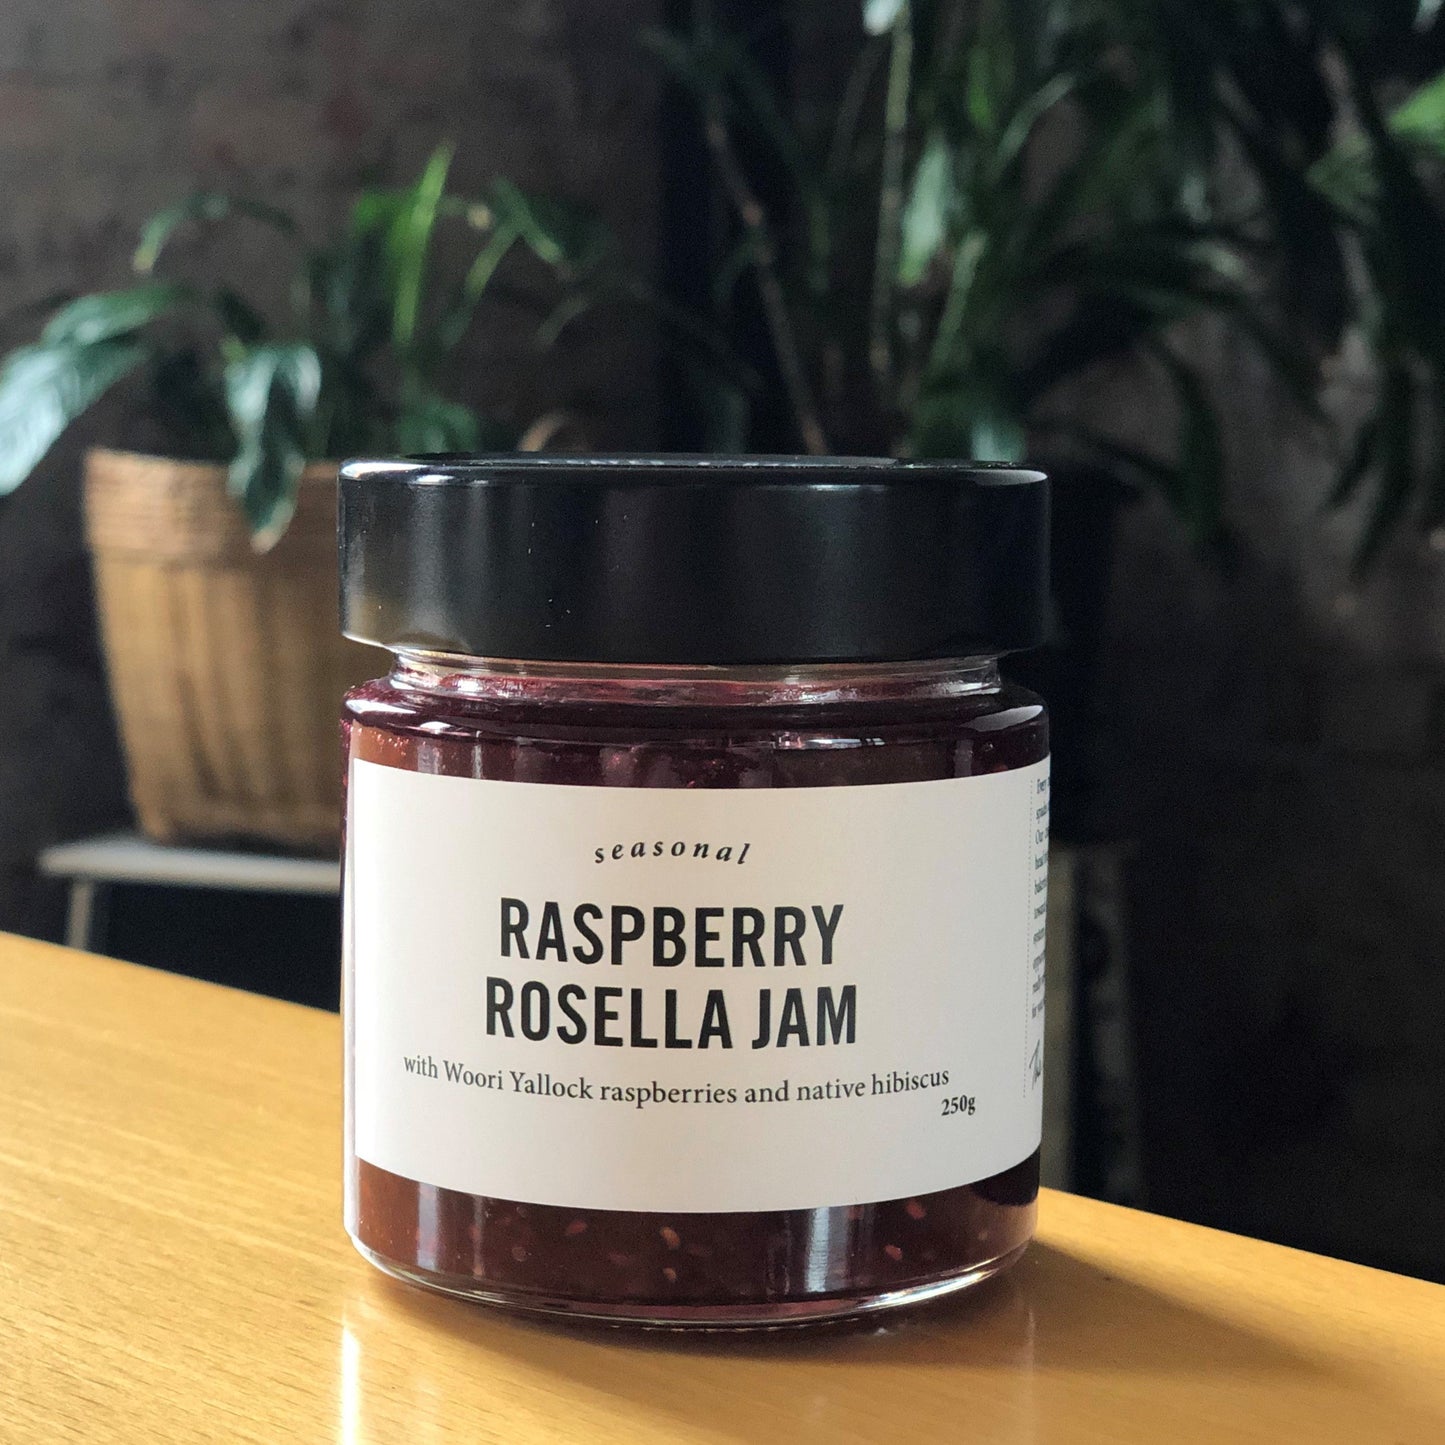 Raspberry & rosella jam